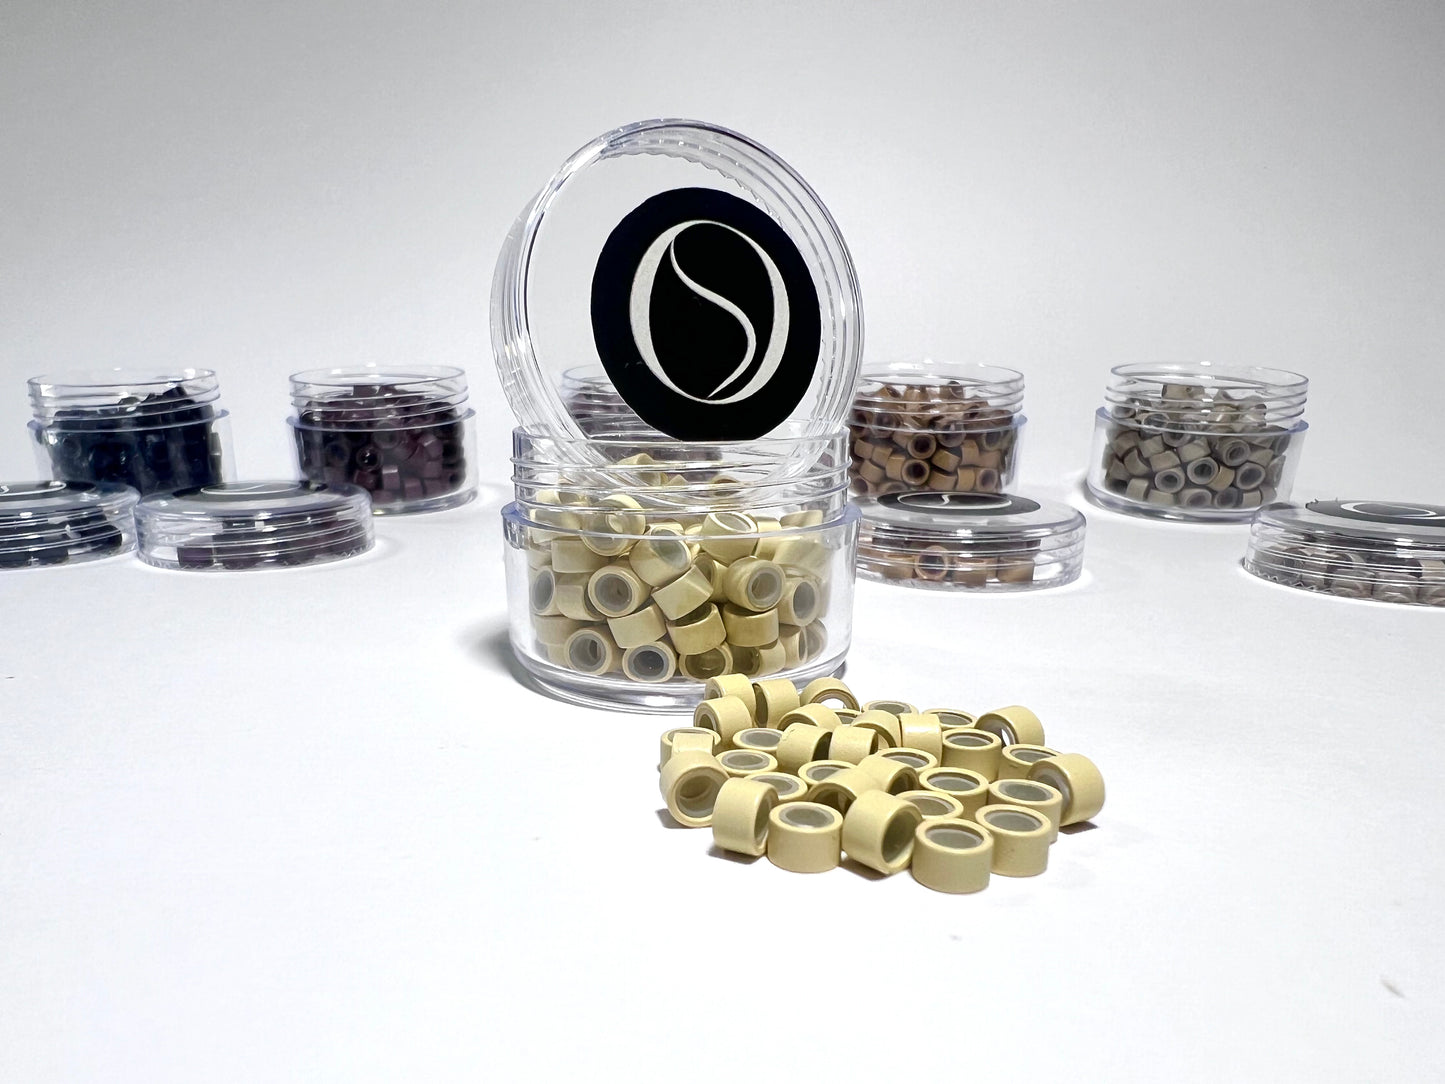 Micro Aros con Silicon / Silicone Lined Micro Beads